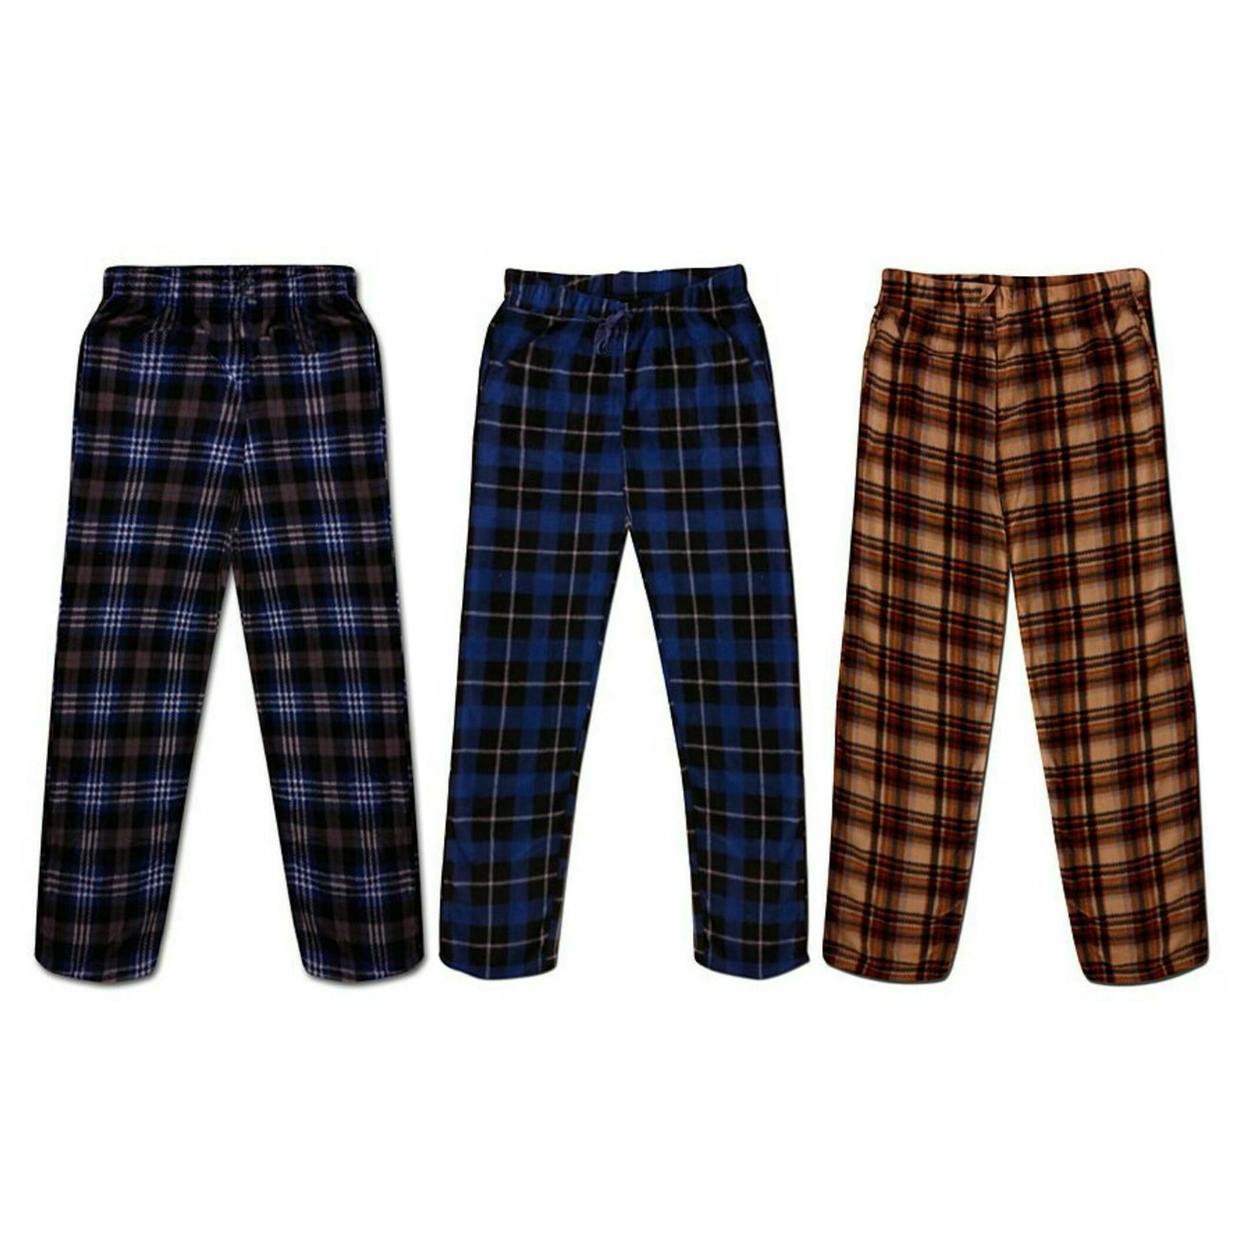 3-Pack: Men's Ultra Soft Cozy Flannel Fleece Plaid Pajama Sleep Bottom Lounge Pants - Small